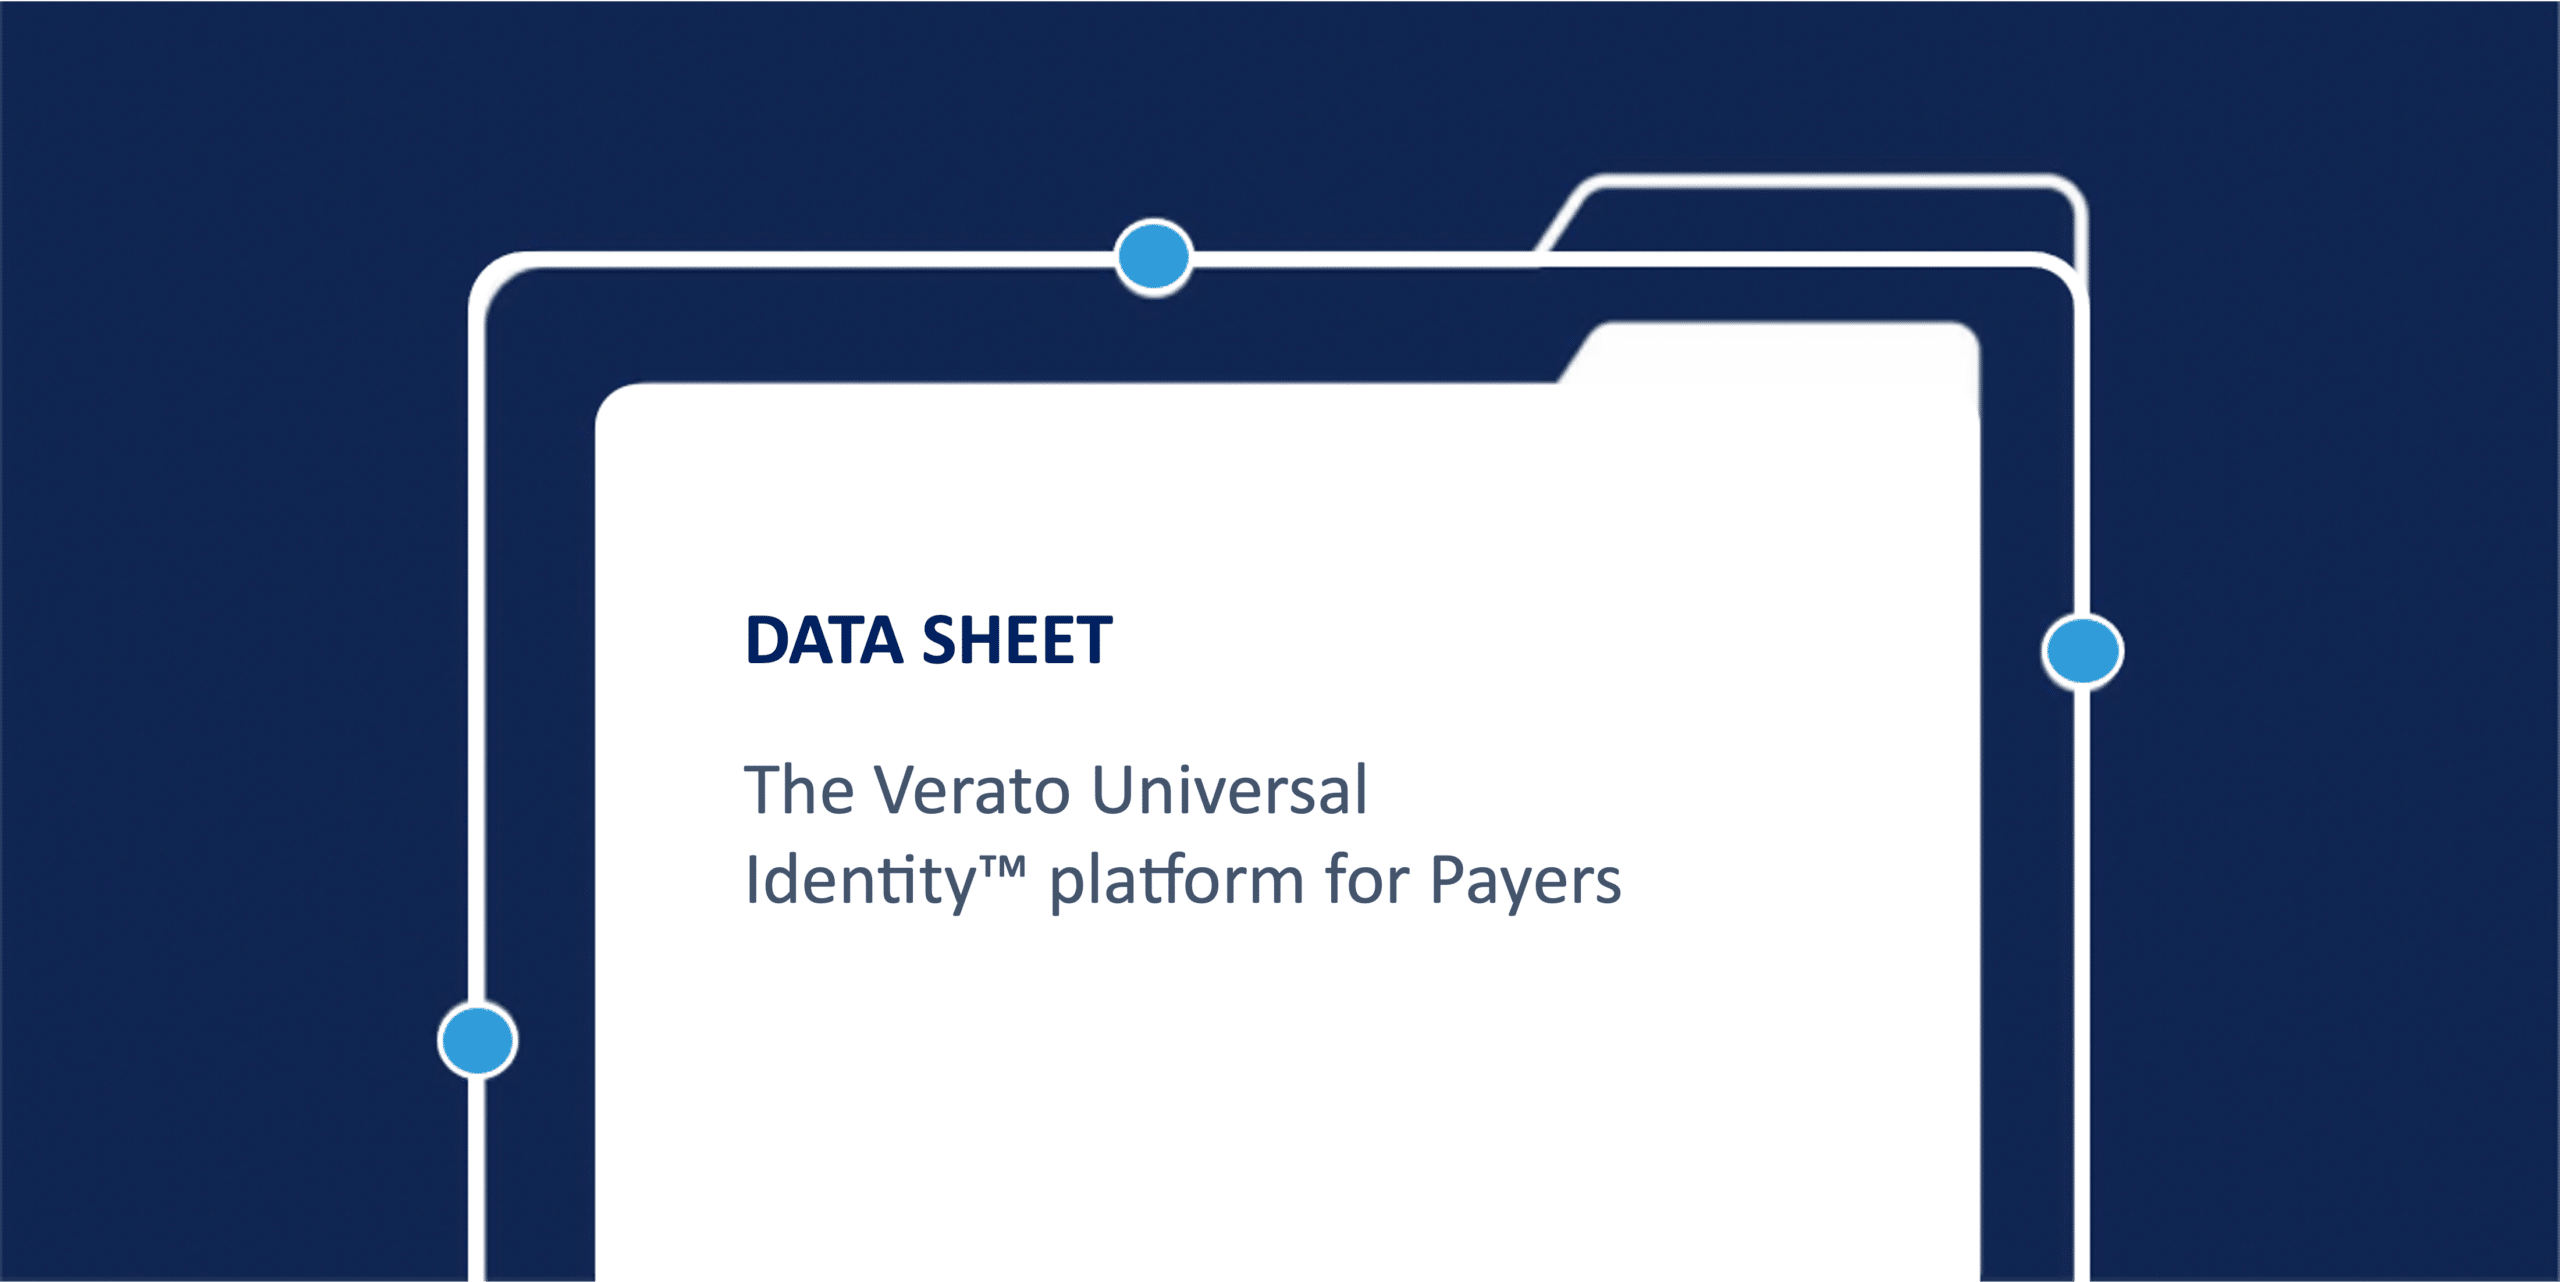 Data Sheet Verato